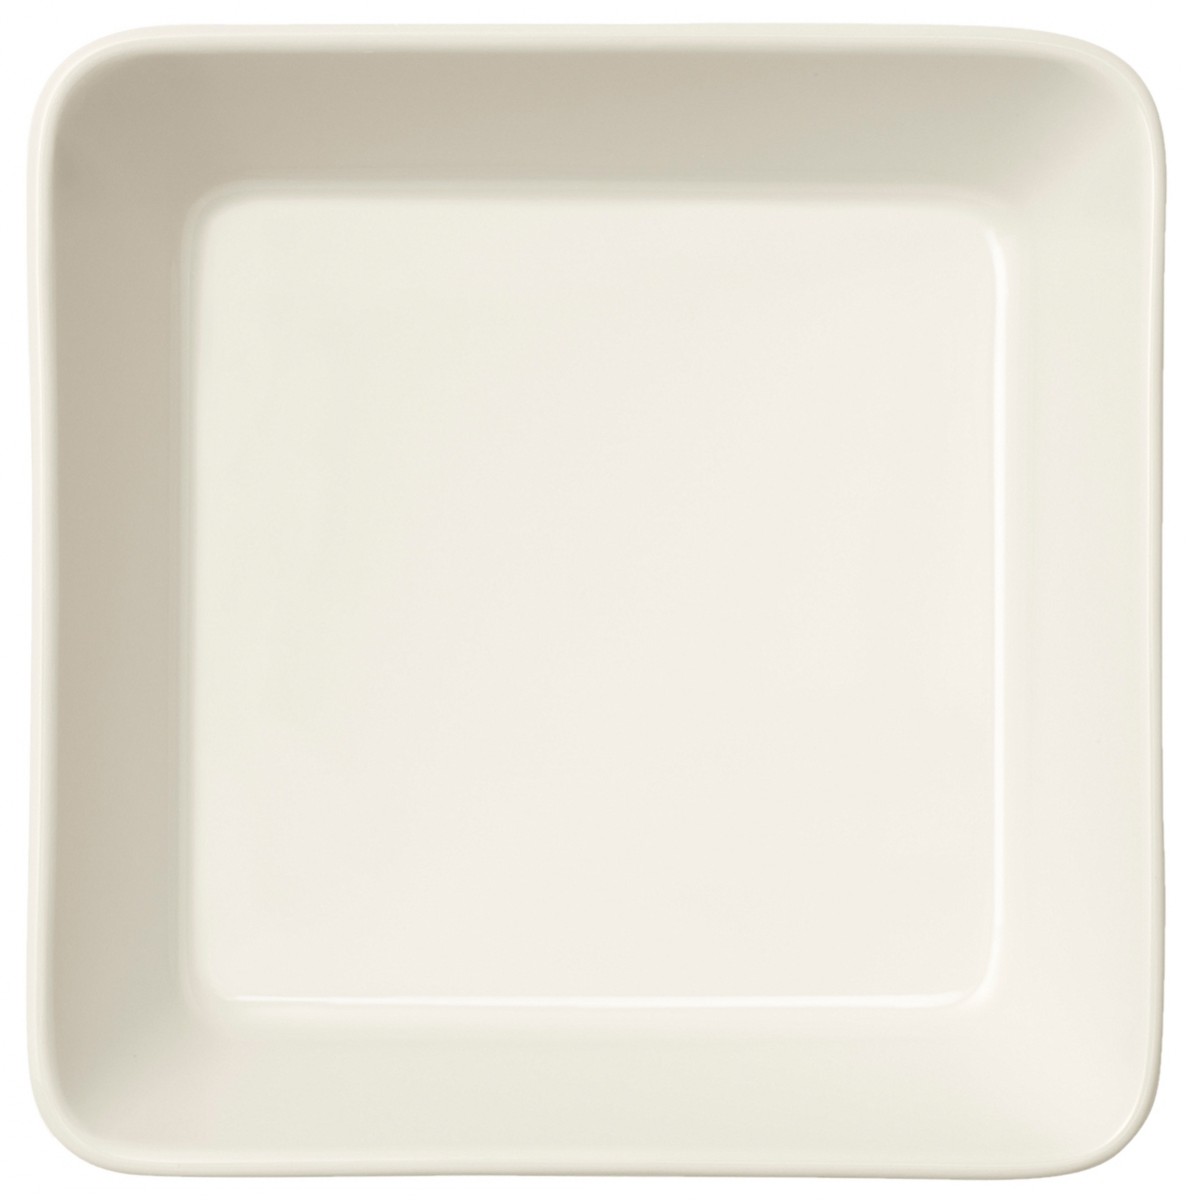 12x12cm - Teema mini-dish square - white - 1006239